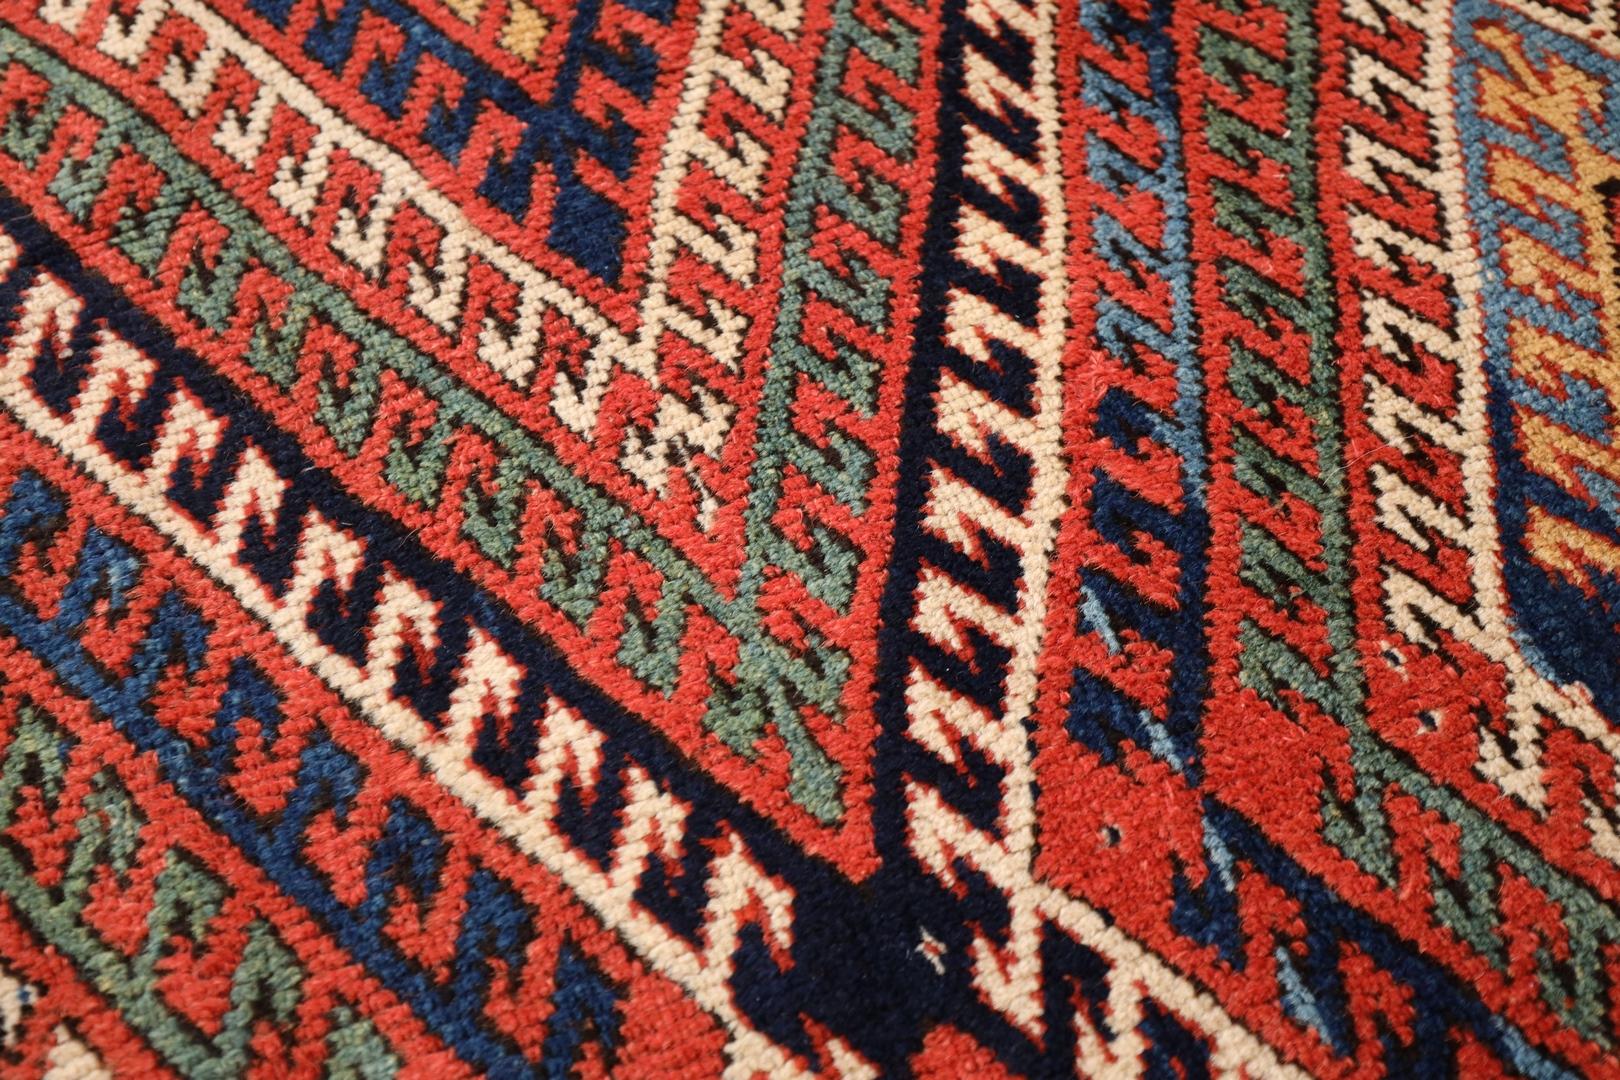 Kurd Antique rug, Colorful - 5'11